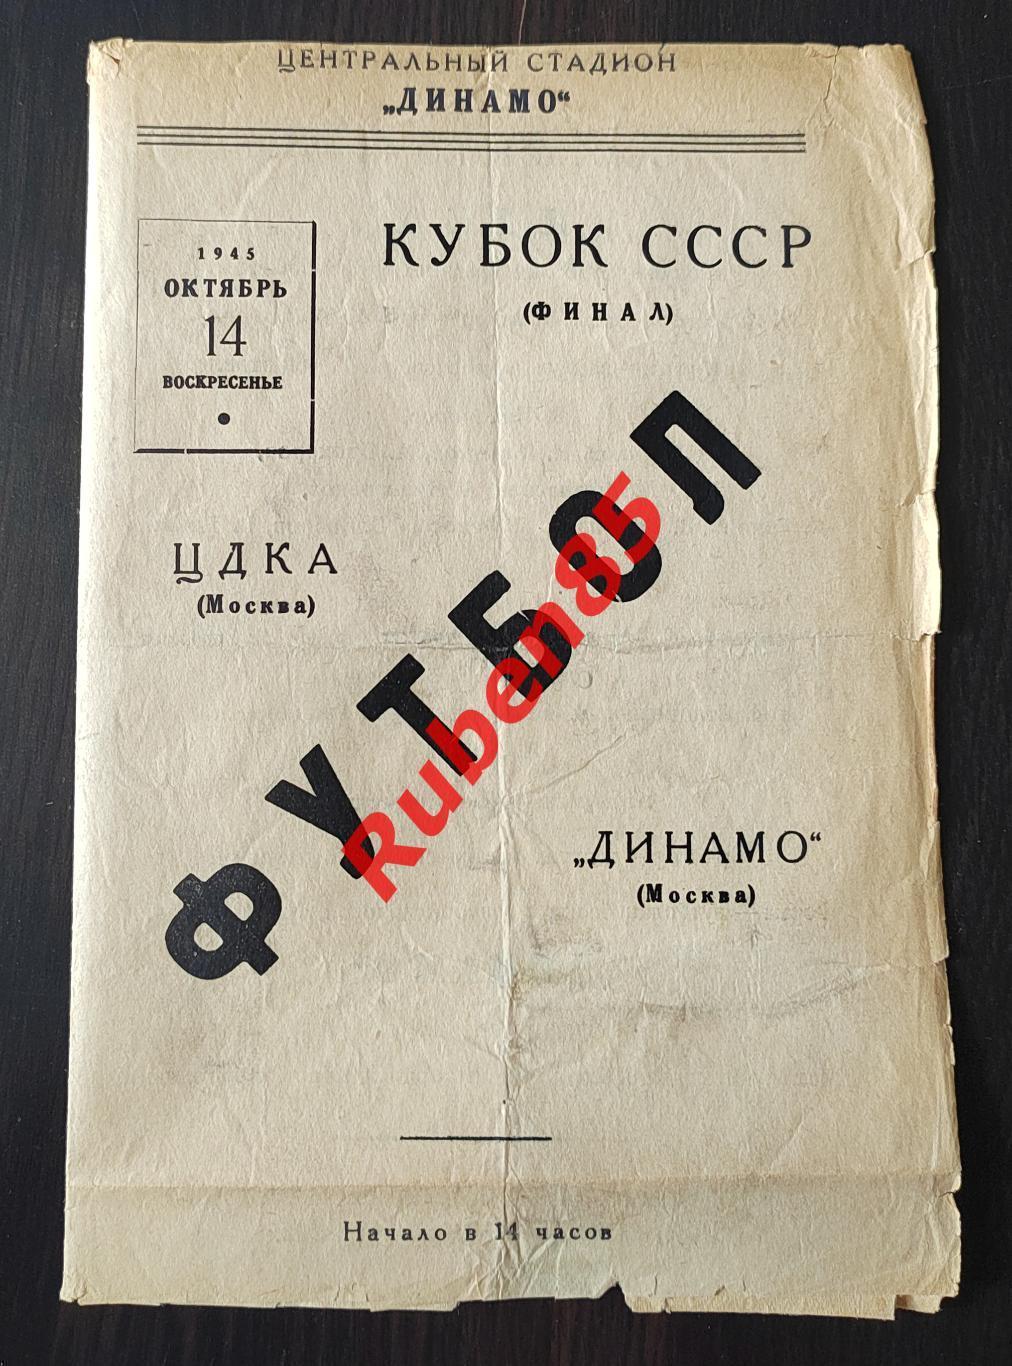 Кубок СССР Финал - Динамо Москва - ЦДКА 1945 ЦСКА